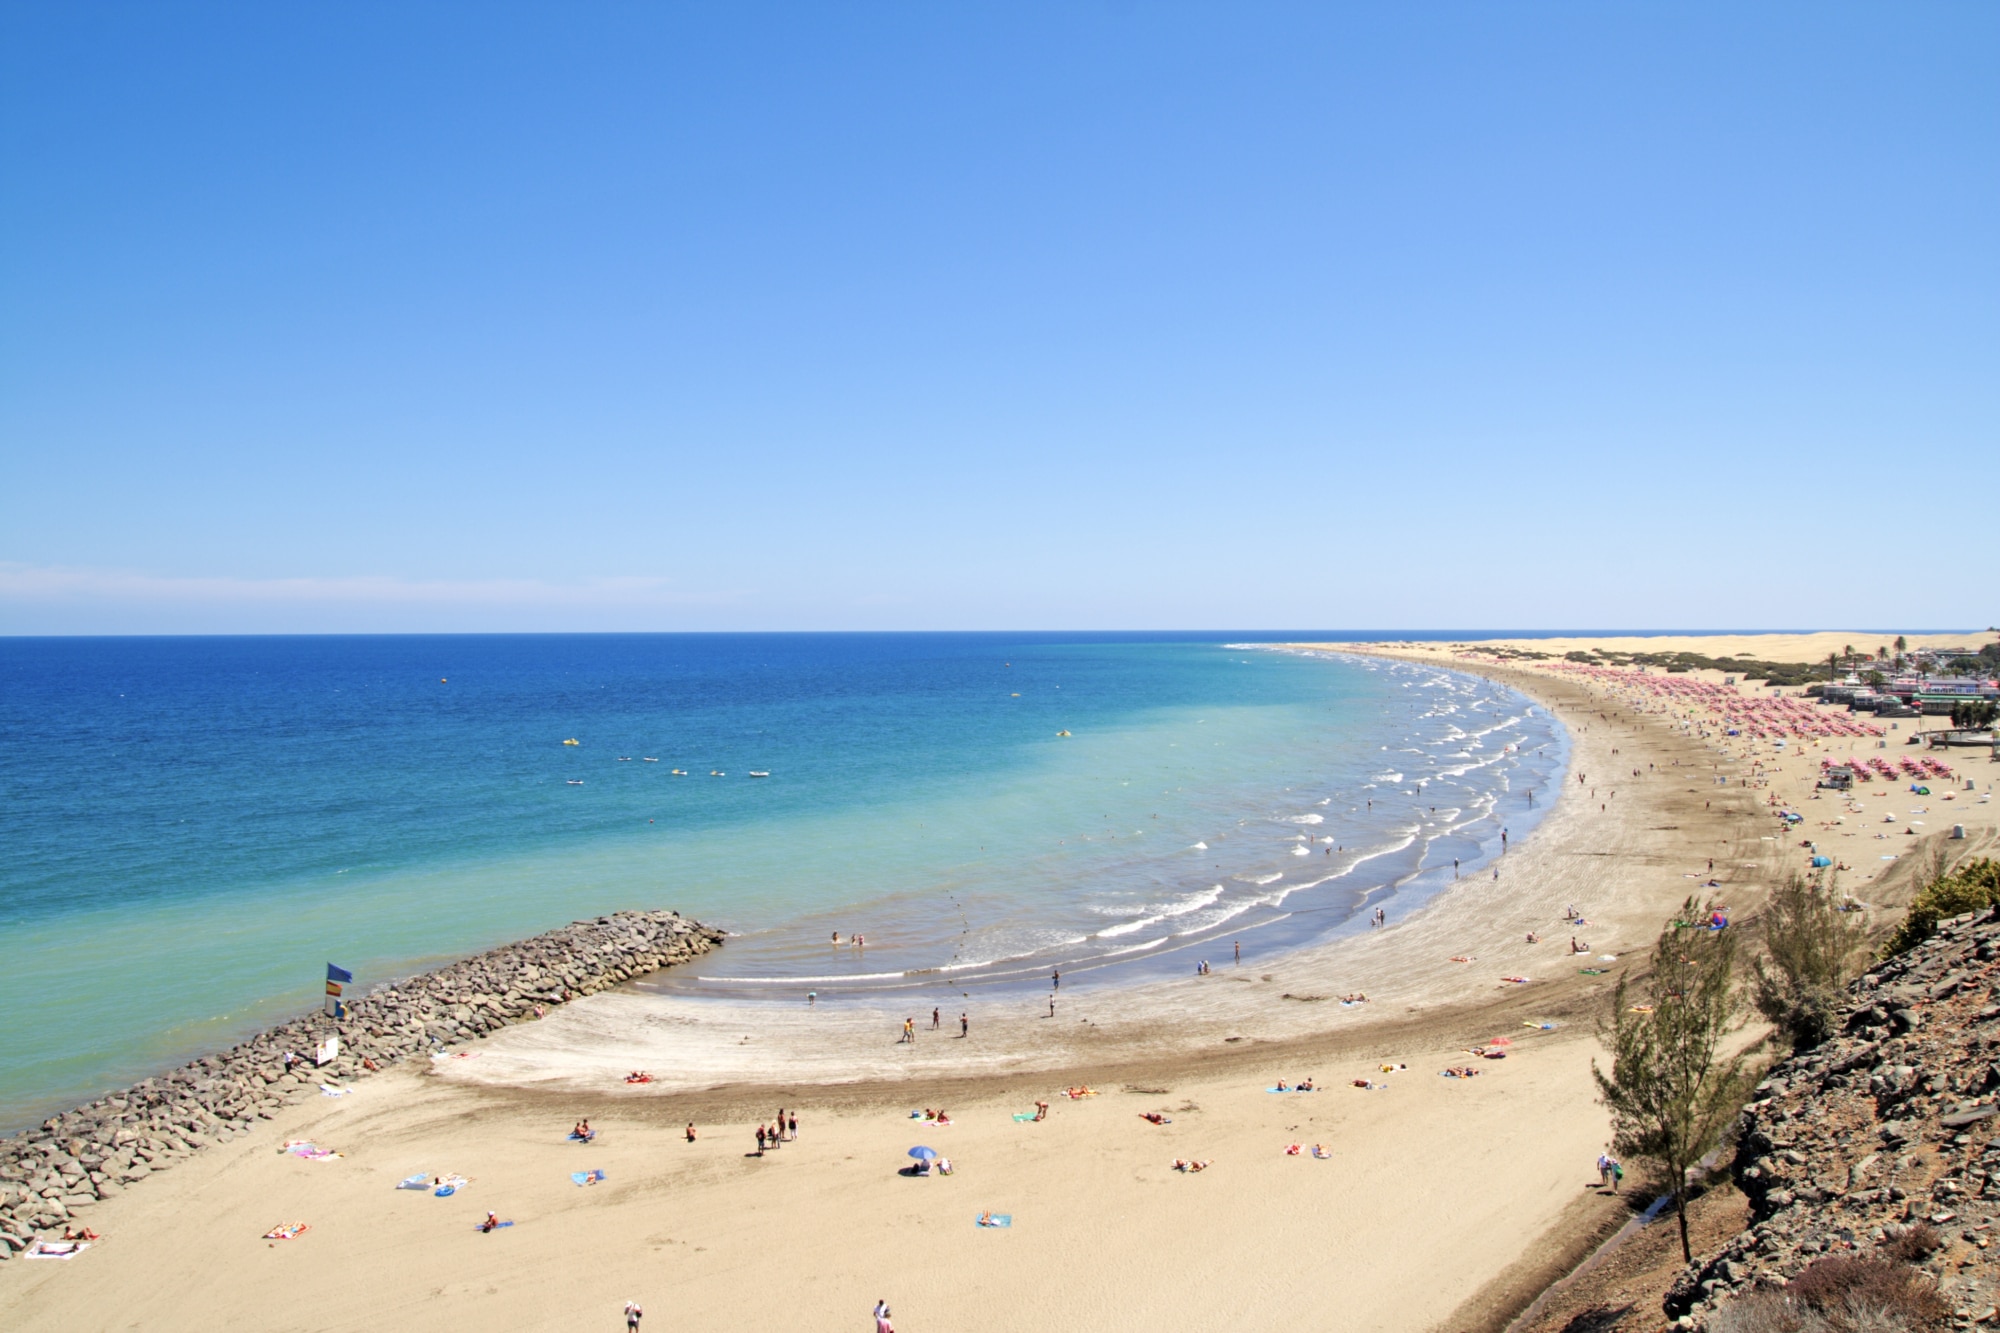 Playa del Ingles, Gran Canaria©Canary Islands